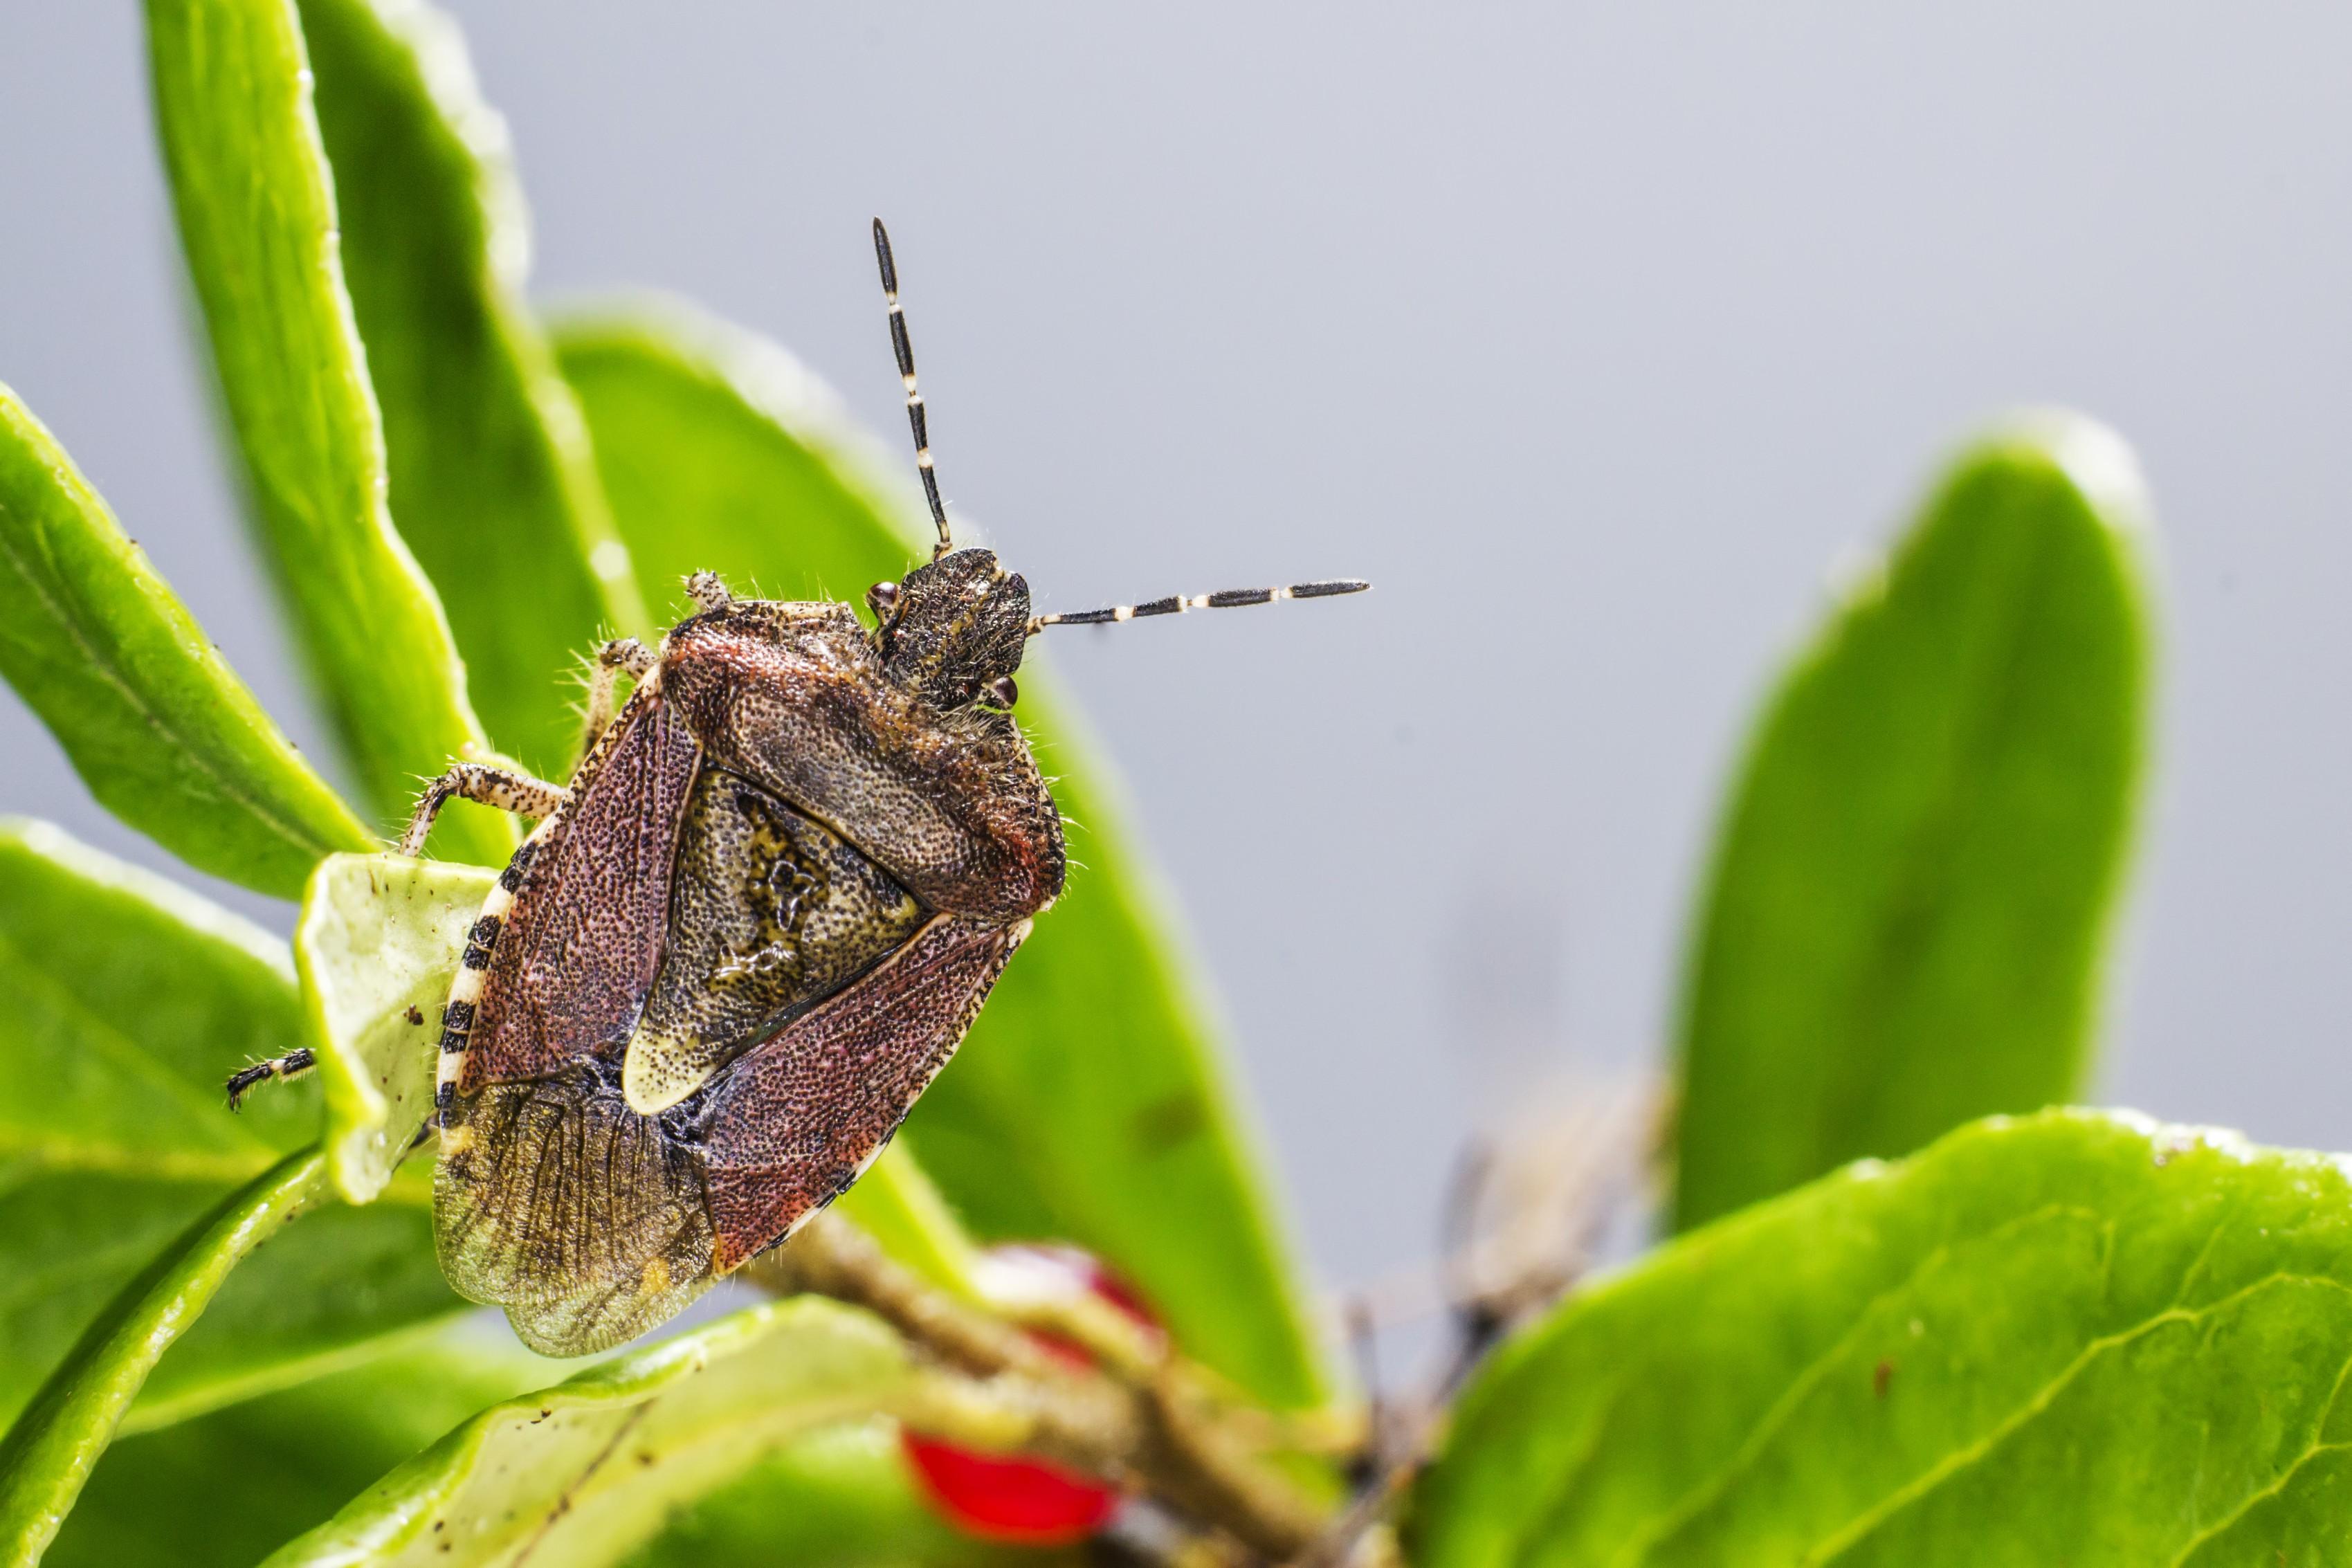 brown-beetle-sitting-plant-close-up (1).jpg